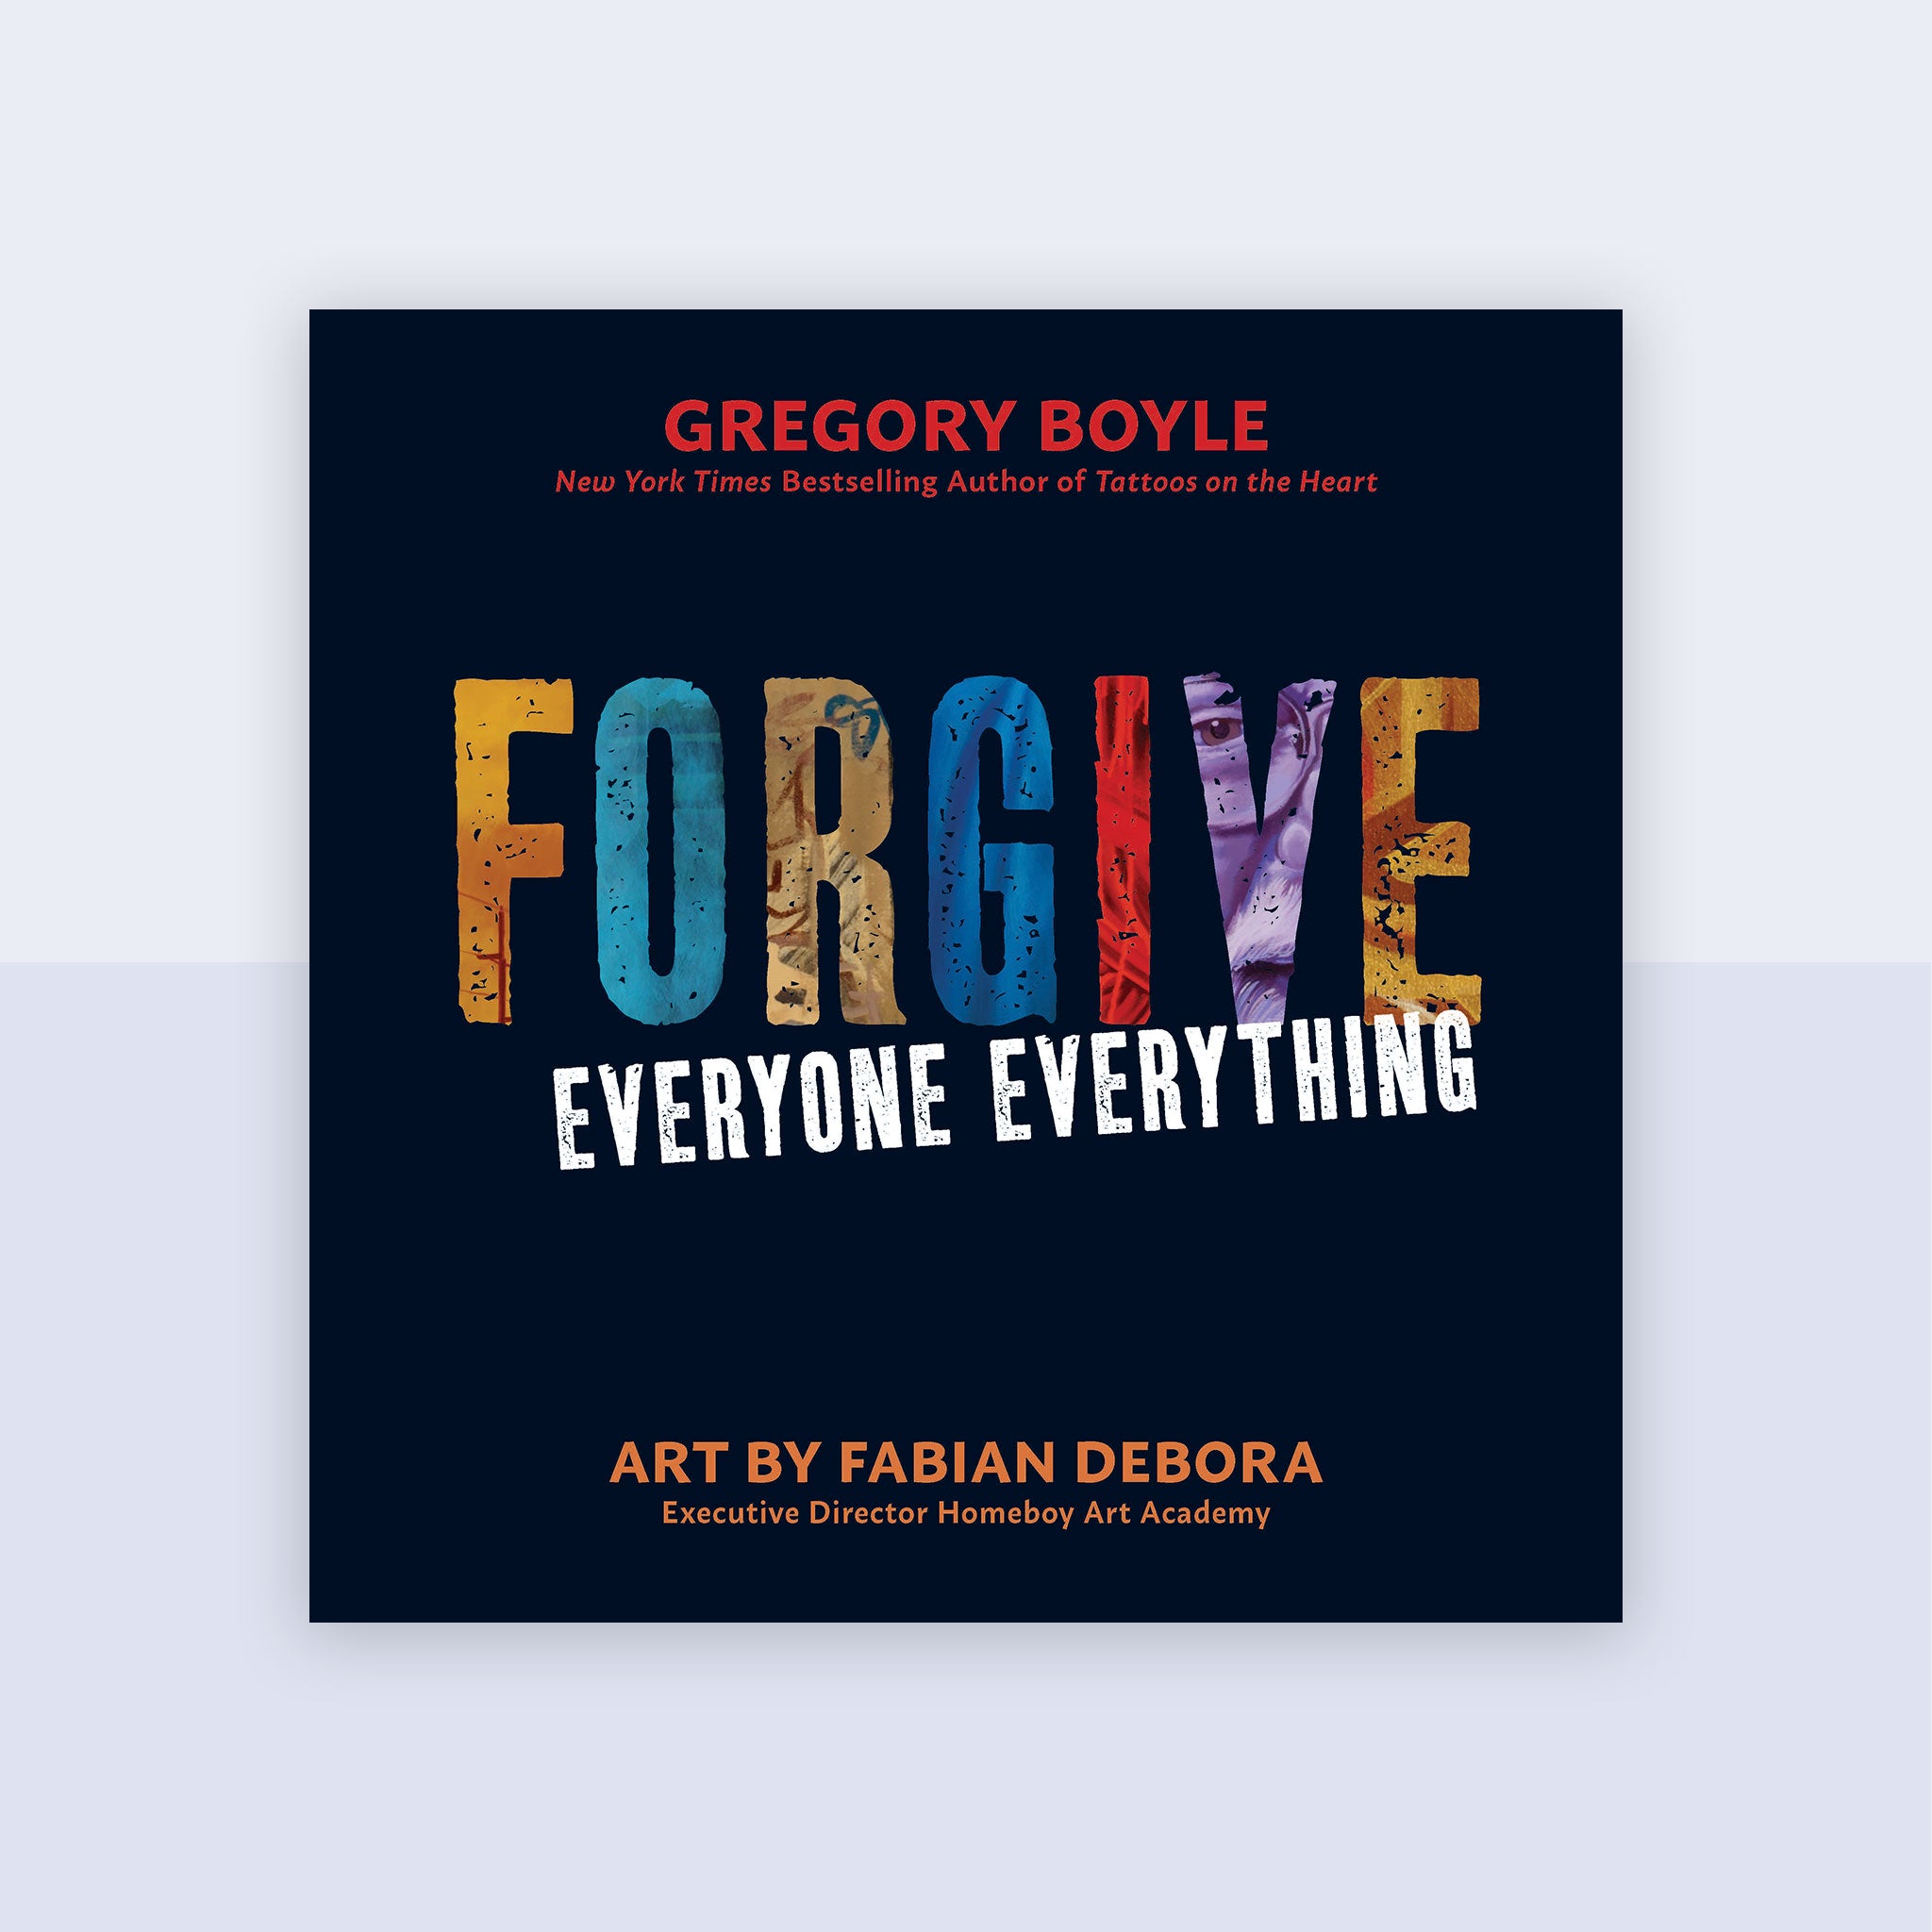 Forgive Everyone Everything